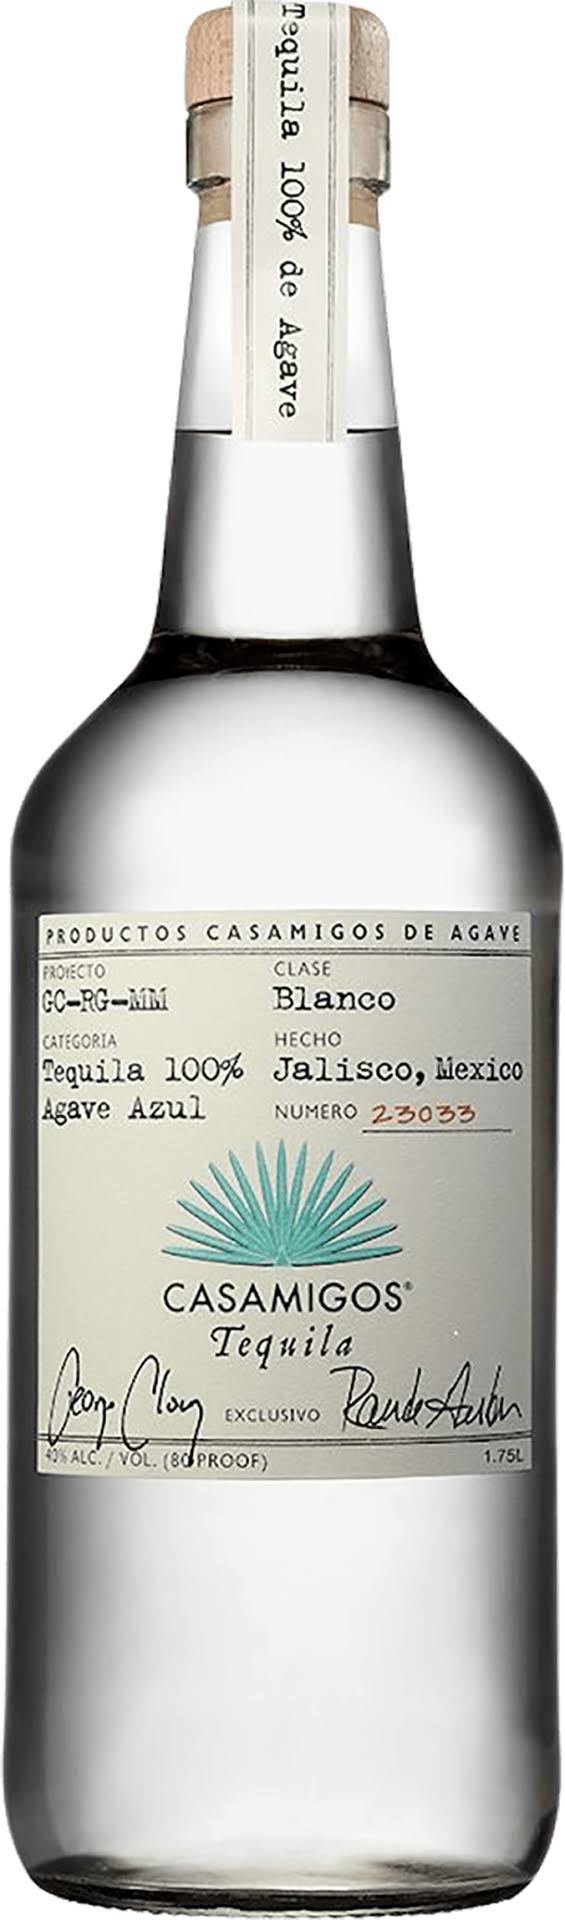 Casamigos Blanco Tequila 1.75lt Bottle